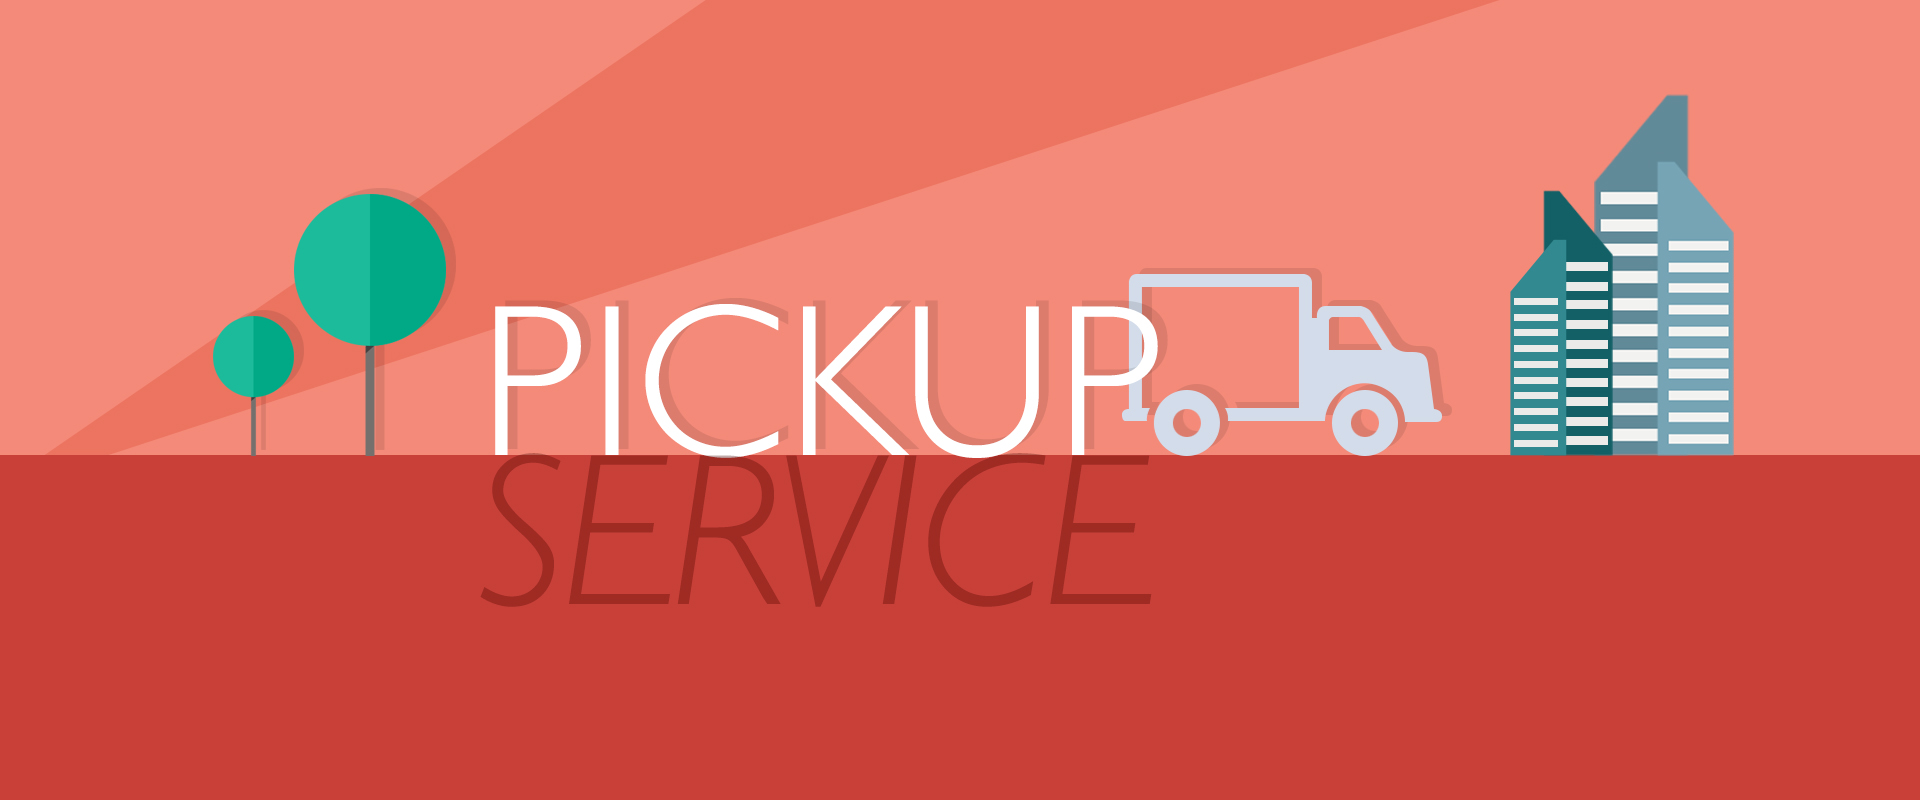 Pickup Service